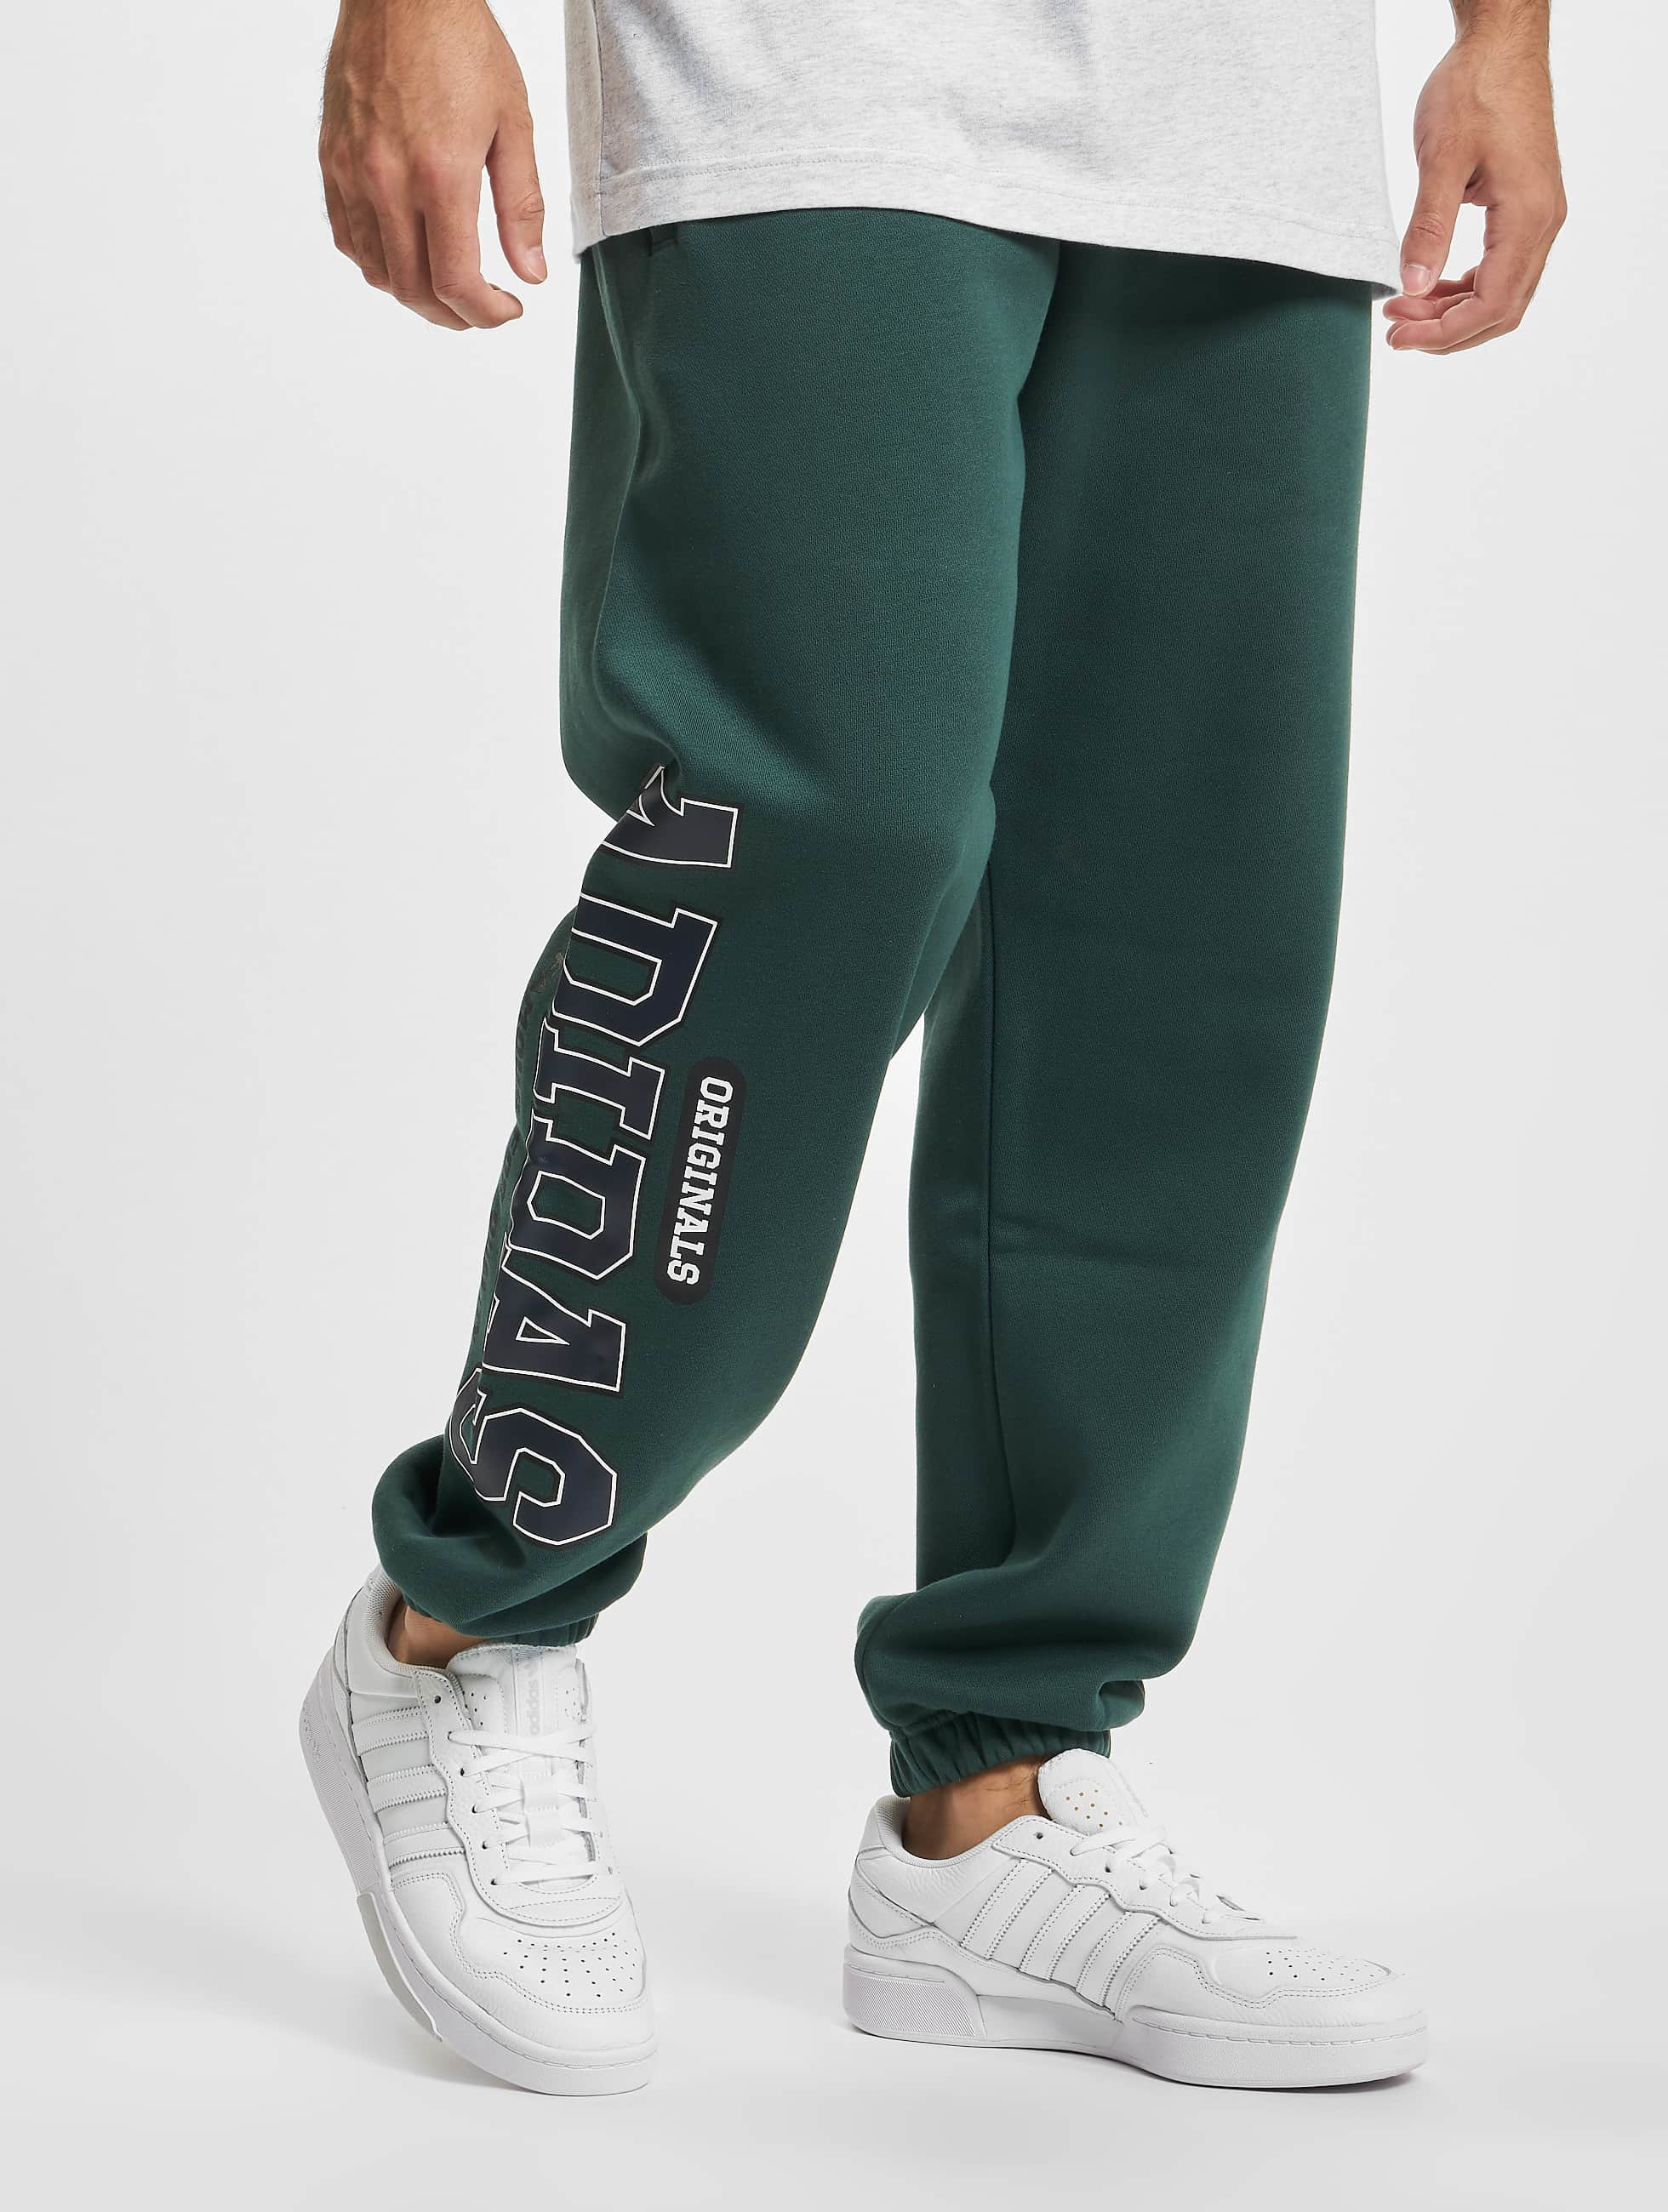 Independencia Antibióticos guisante adidas Originals Pantalón / Pantalón deportivo Varsity en verde 911576